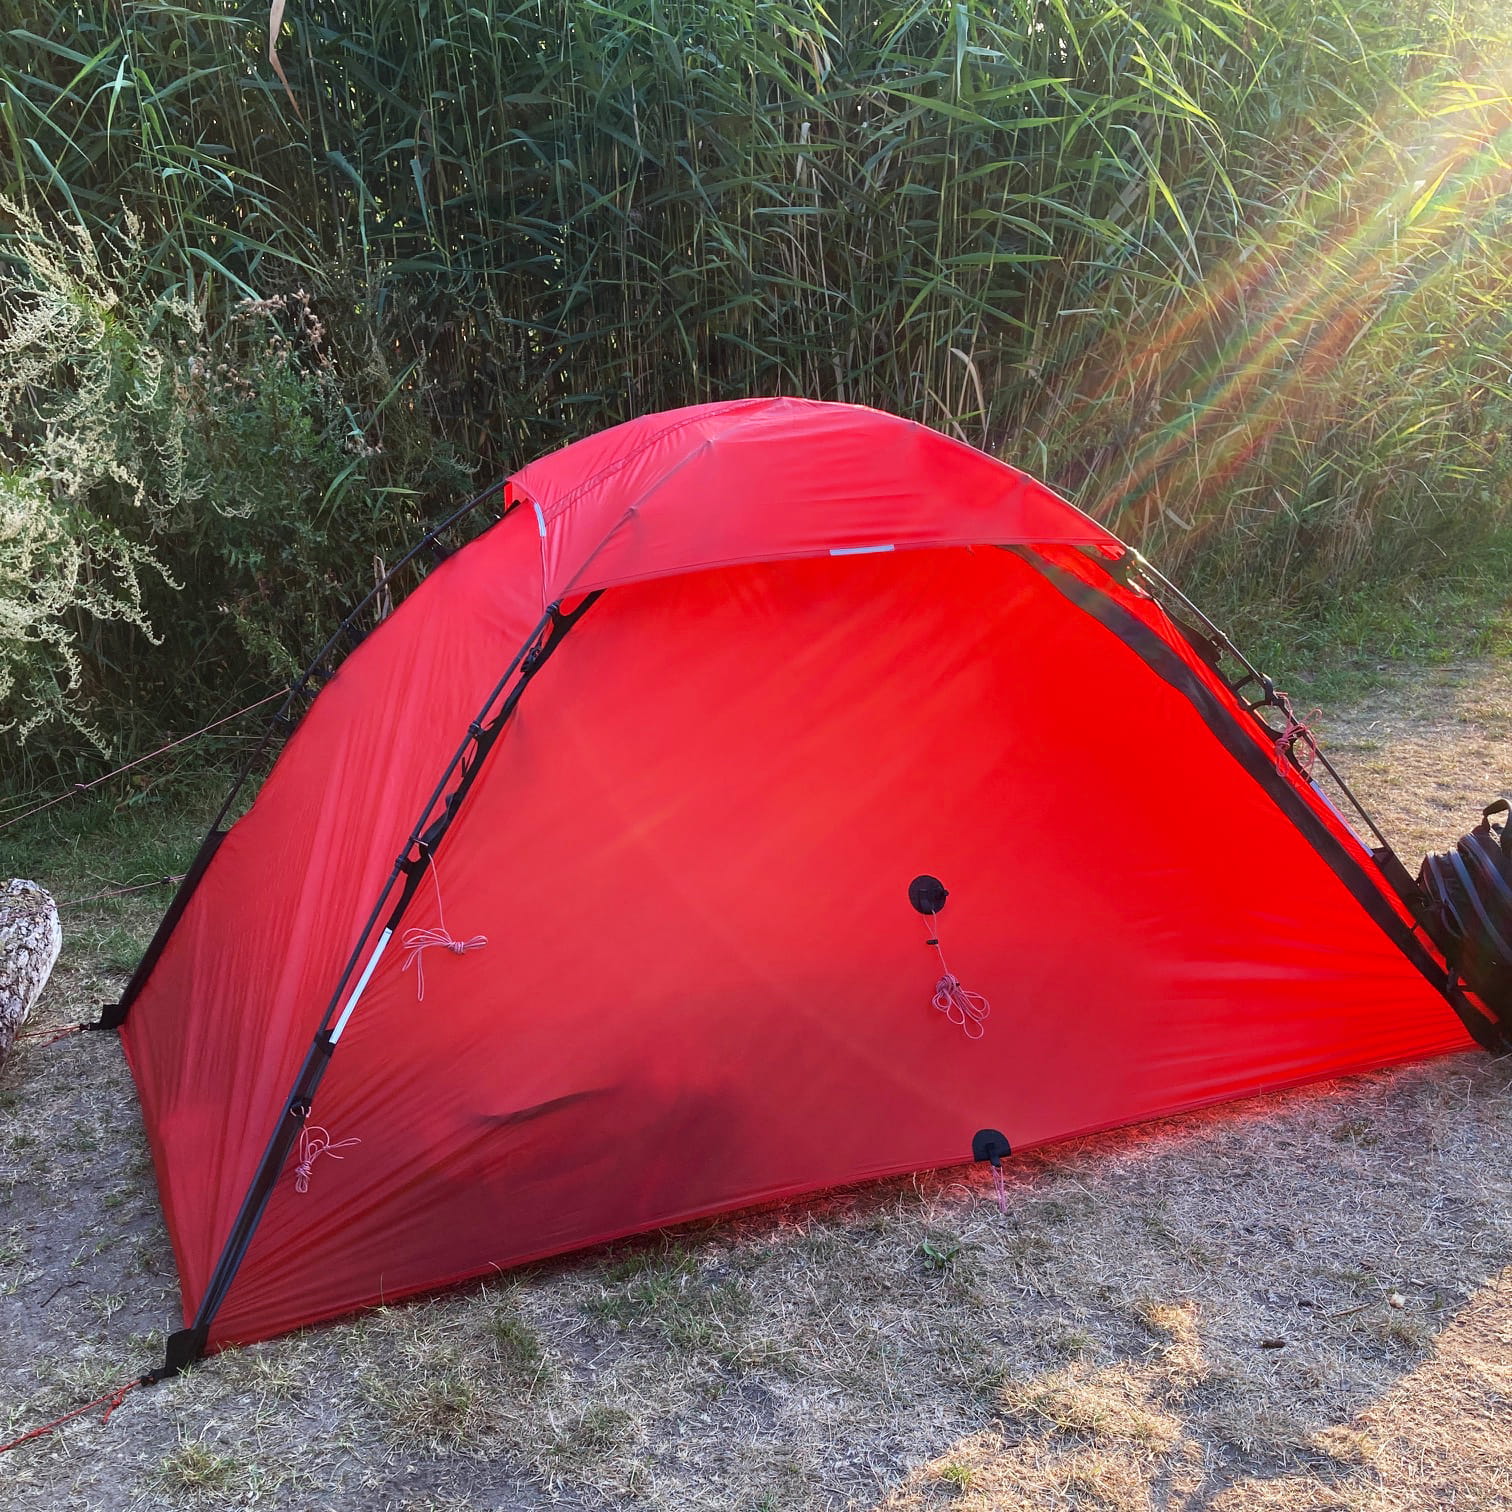 One-personen-tent made of 20den silnylon